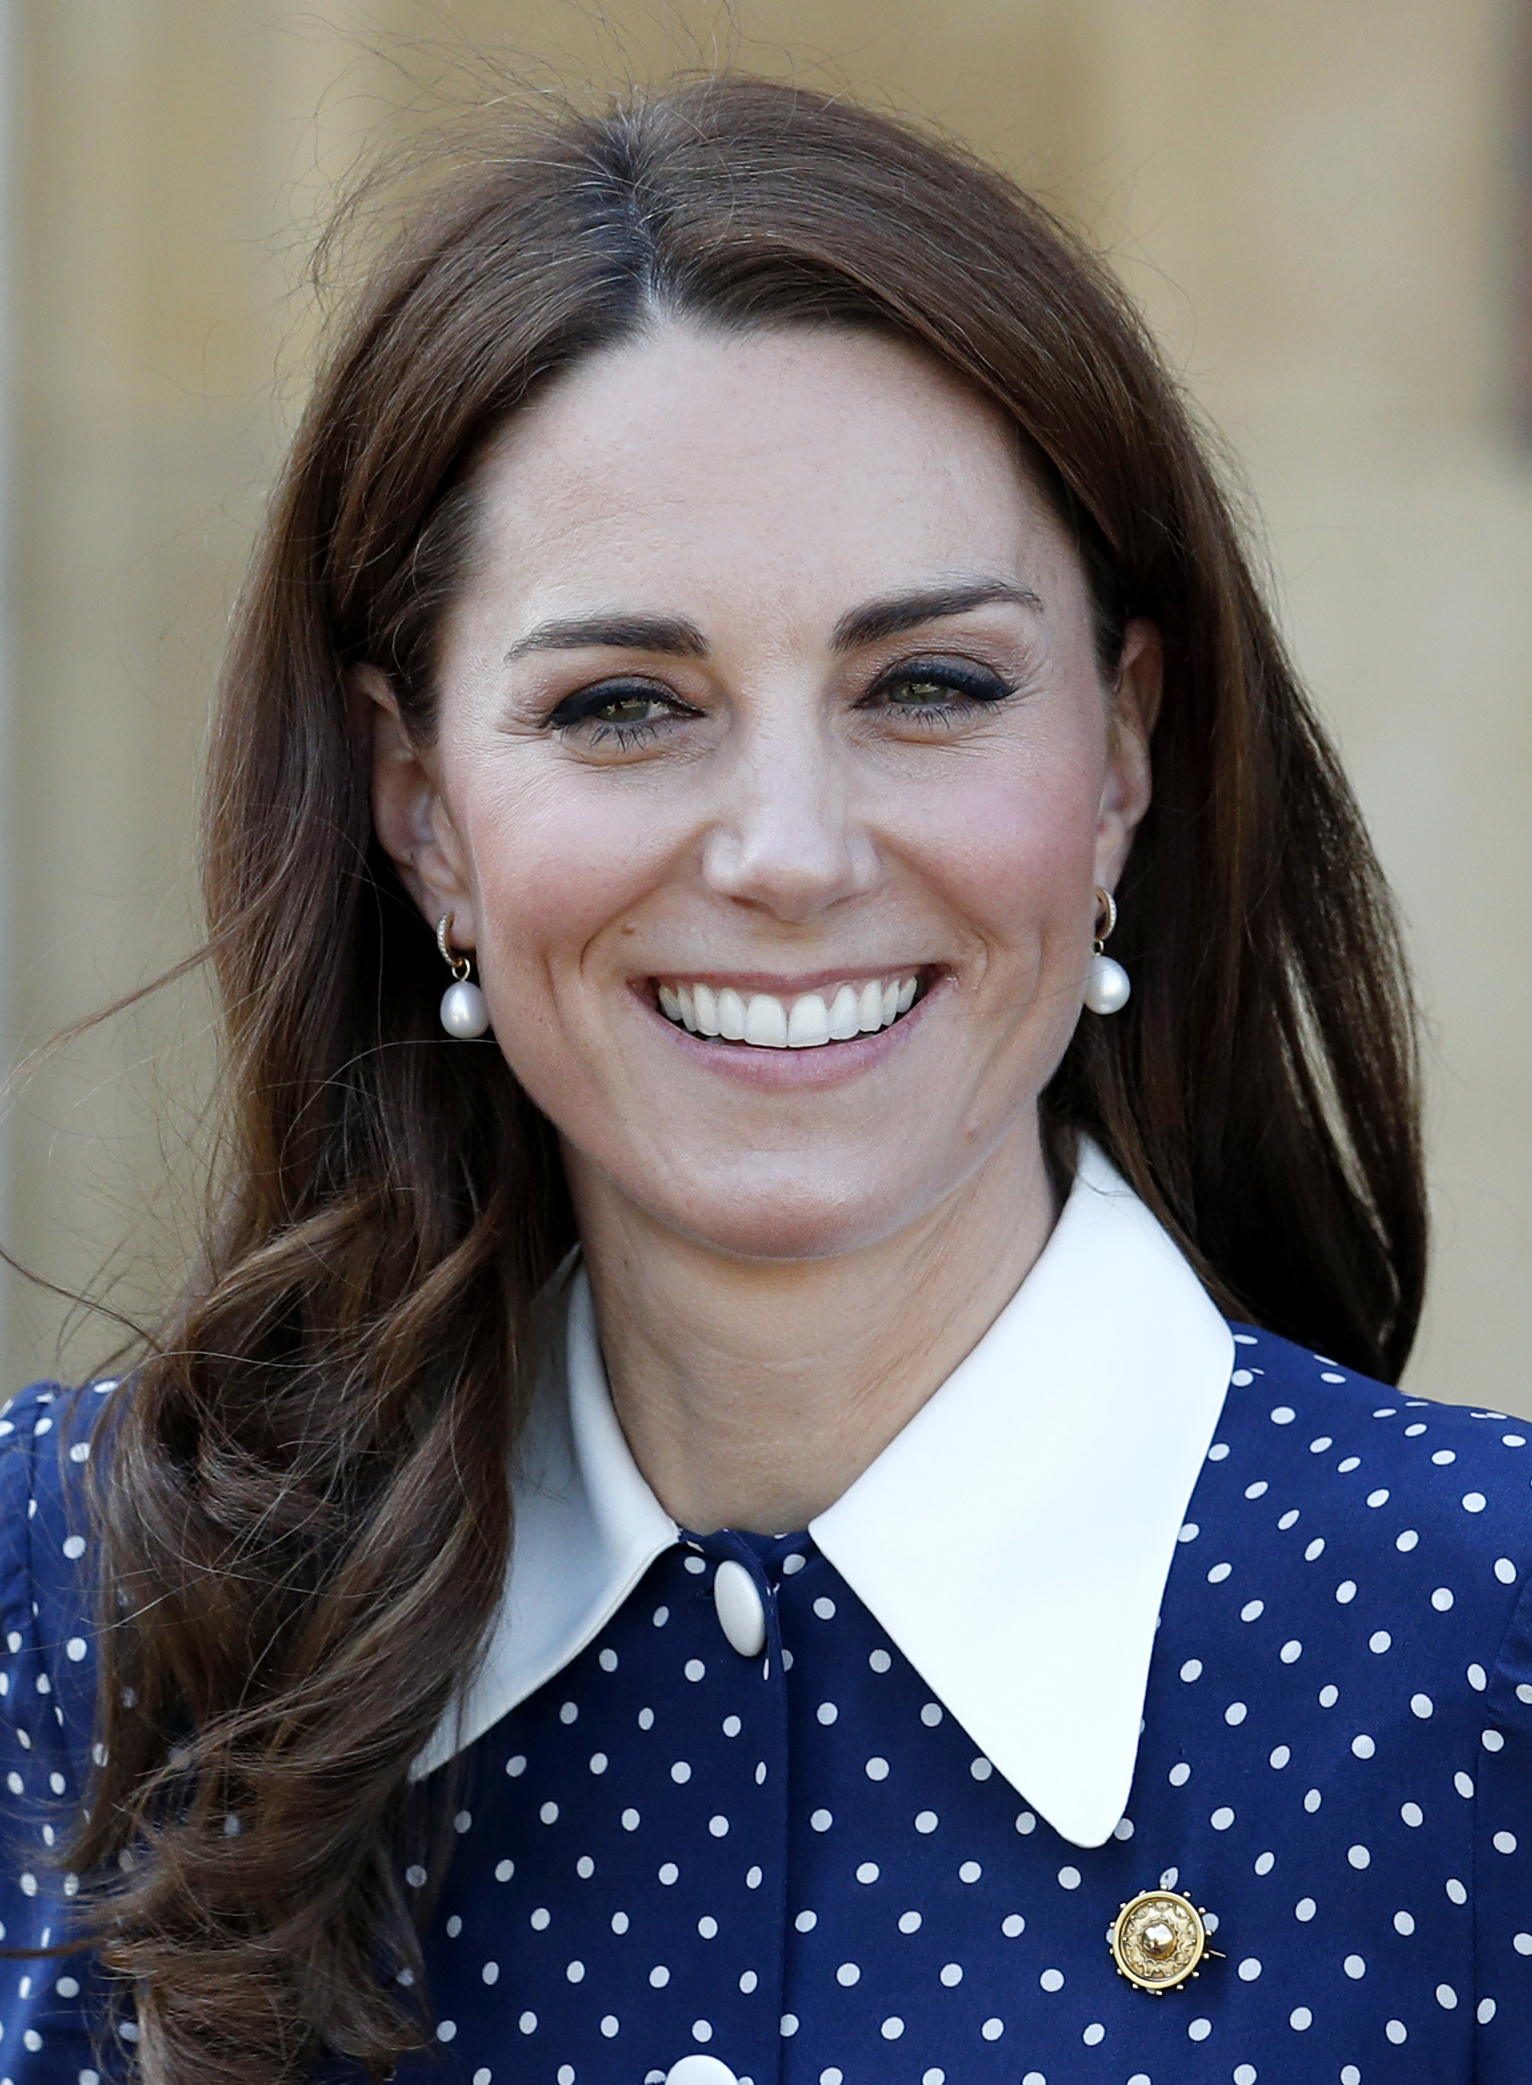 Kate Middleton Visits World War II Center at Bletchley Park: Photos ...